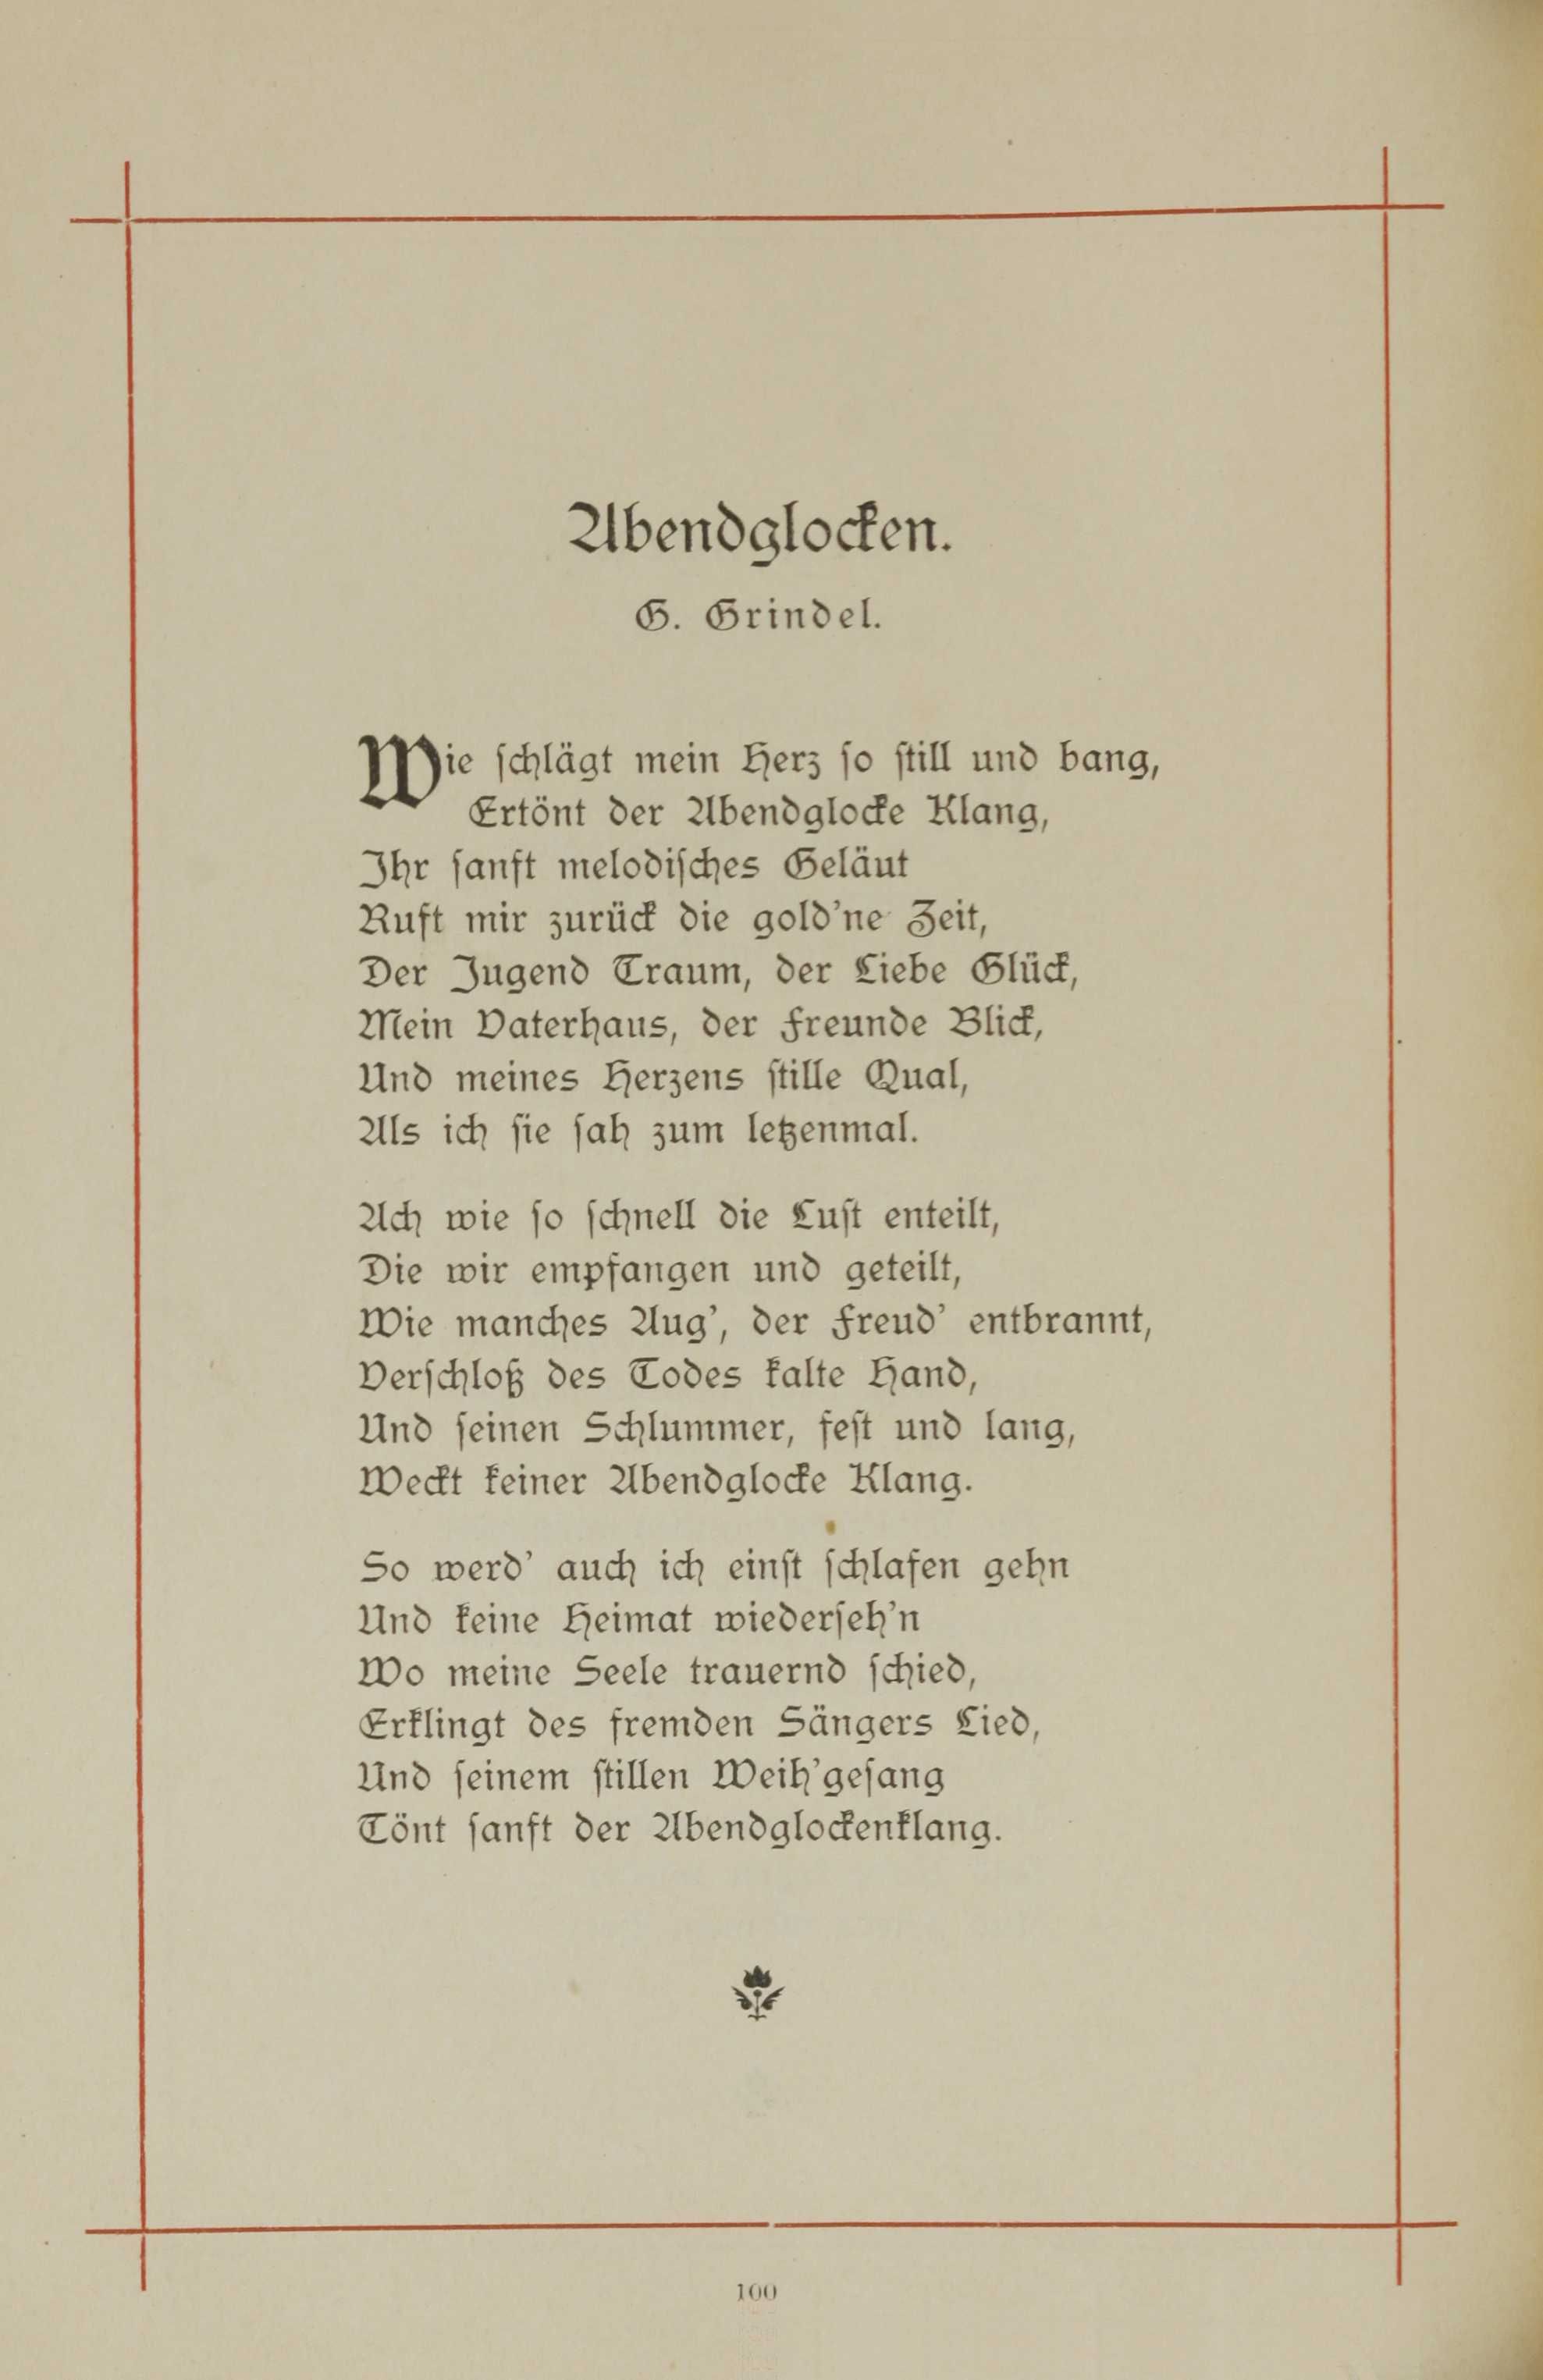 Erinnerung an die Fraternitas (1893) | 105. (100) Main body of text